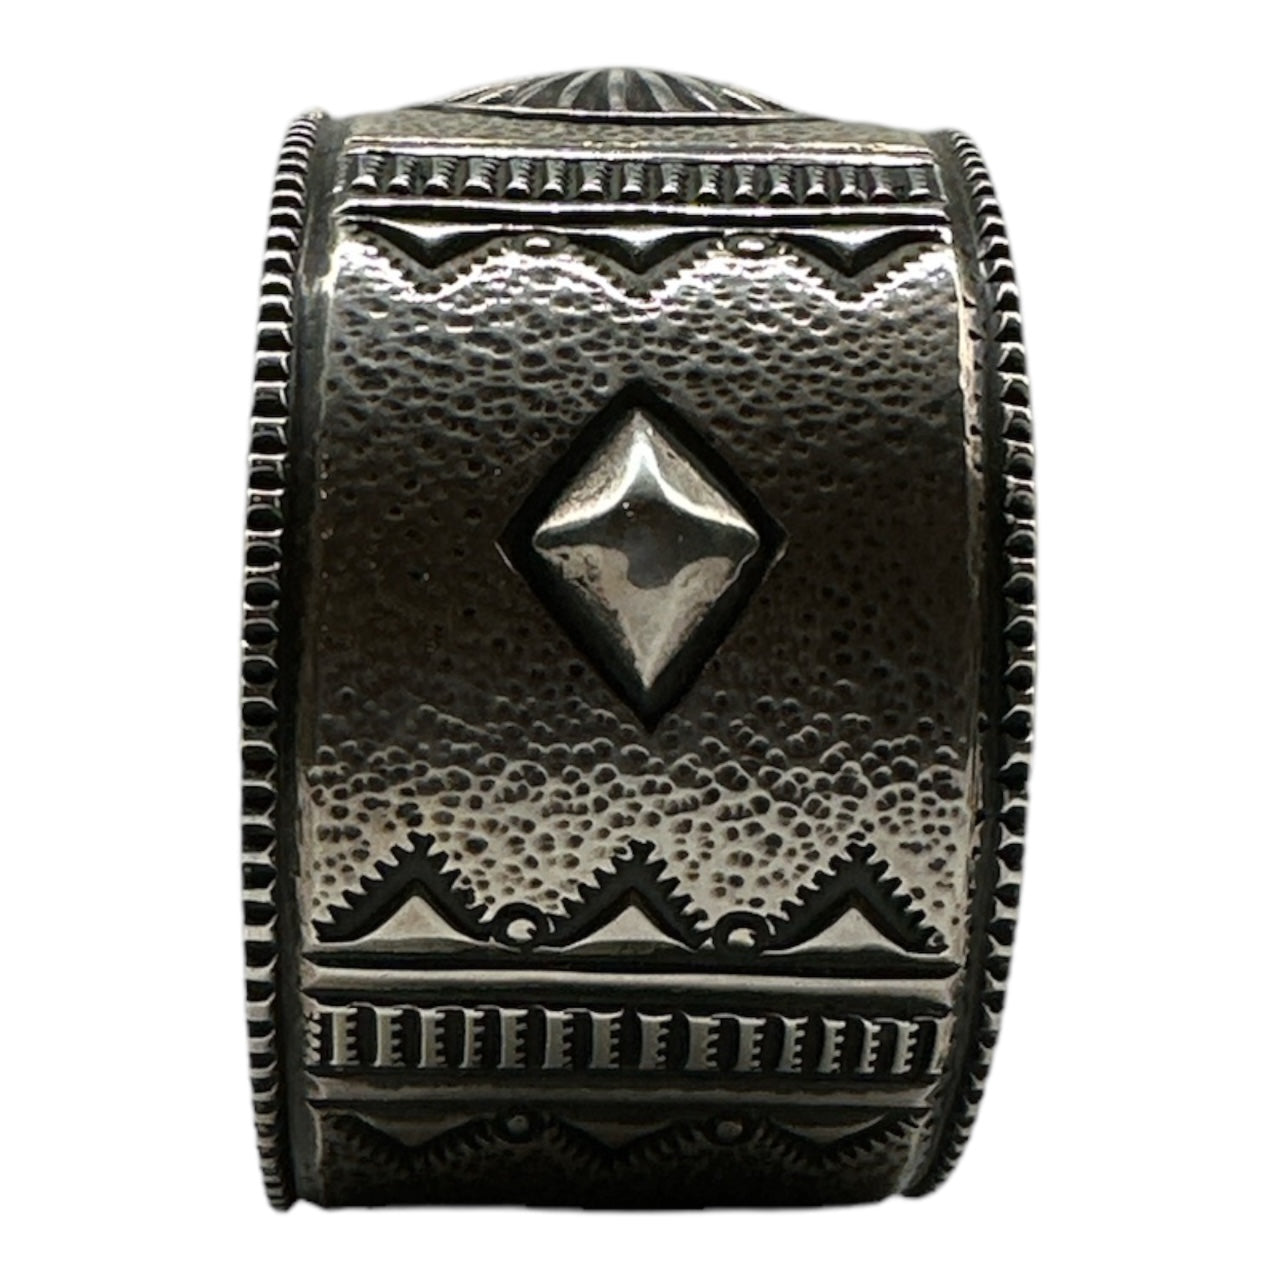 Edison Cummings navajo bracelet, silver jewelry, telluride 